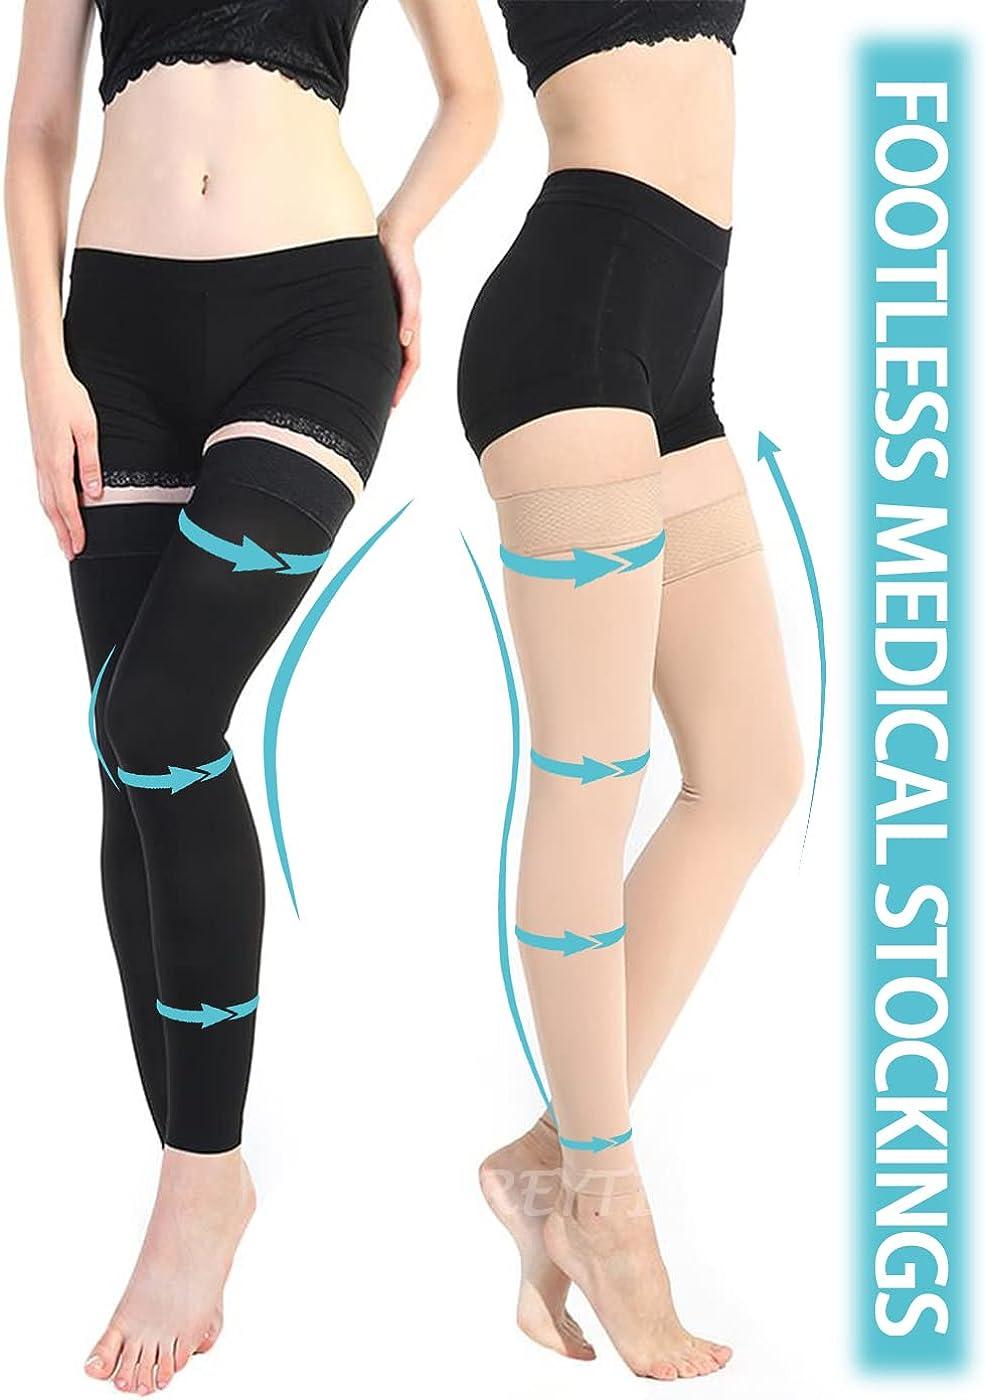 Women Men Medical Compression Stockings Thigh High Varicose Veins Travel  Socks